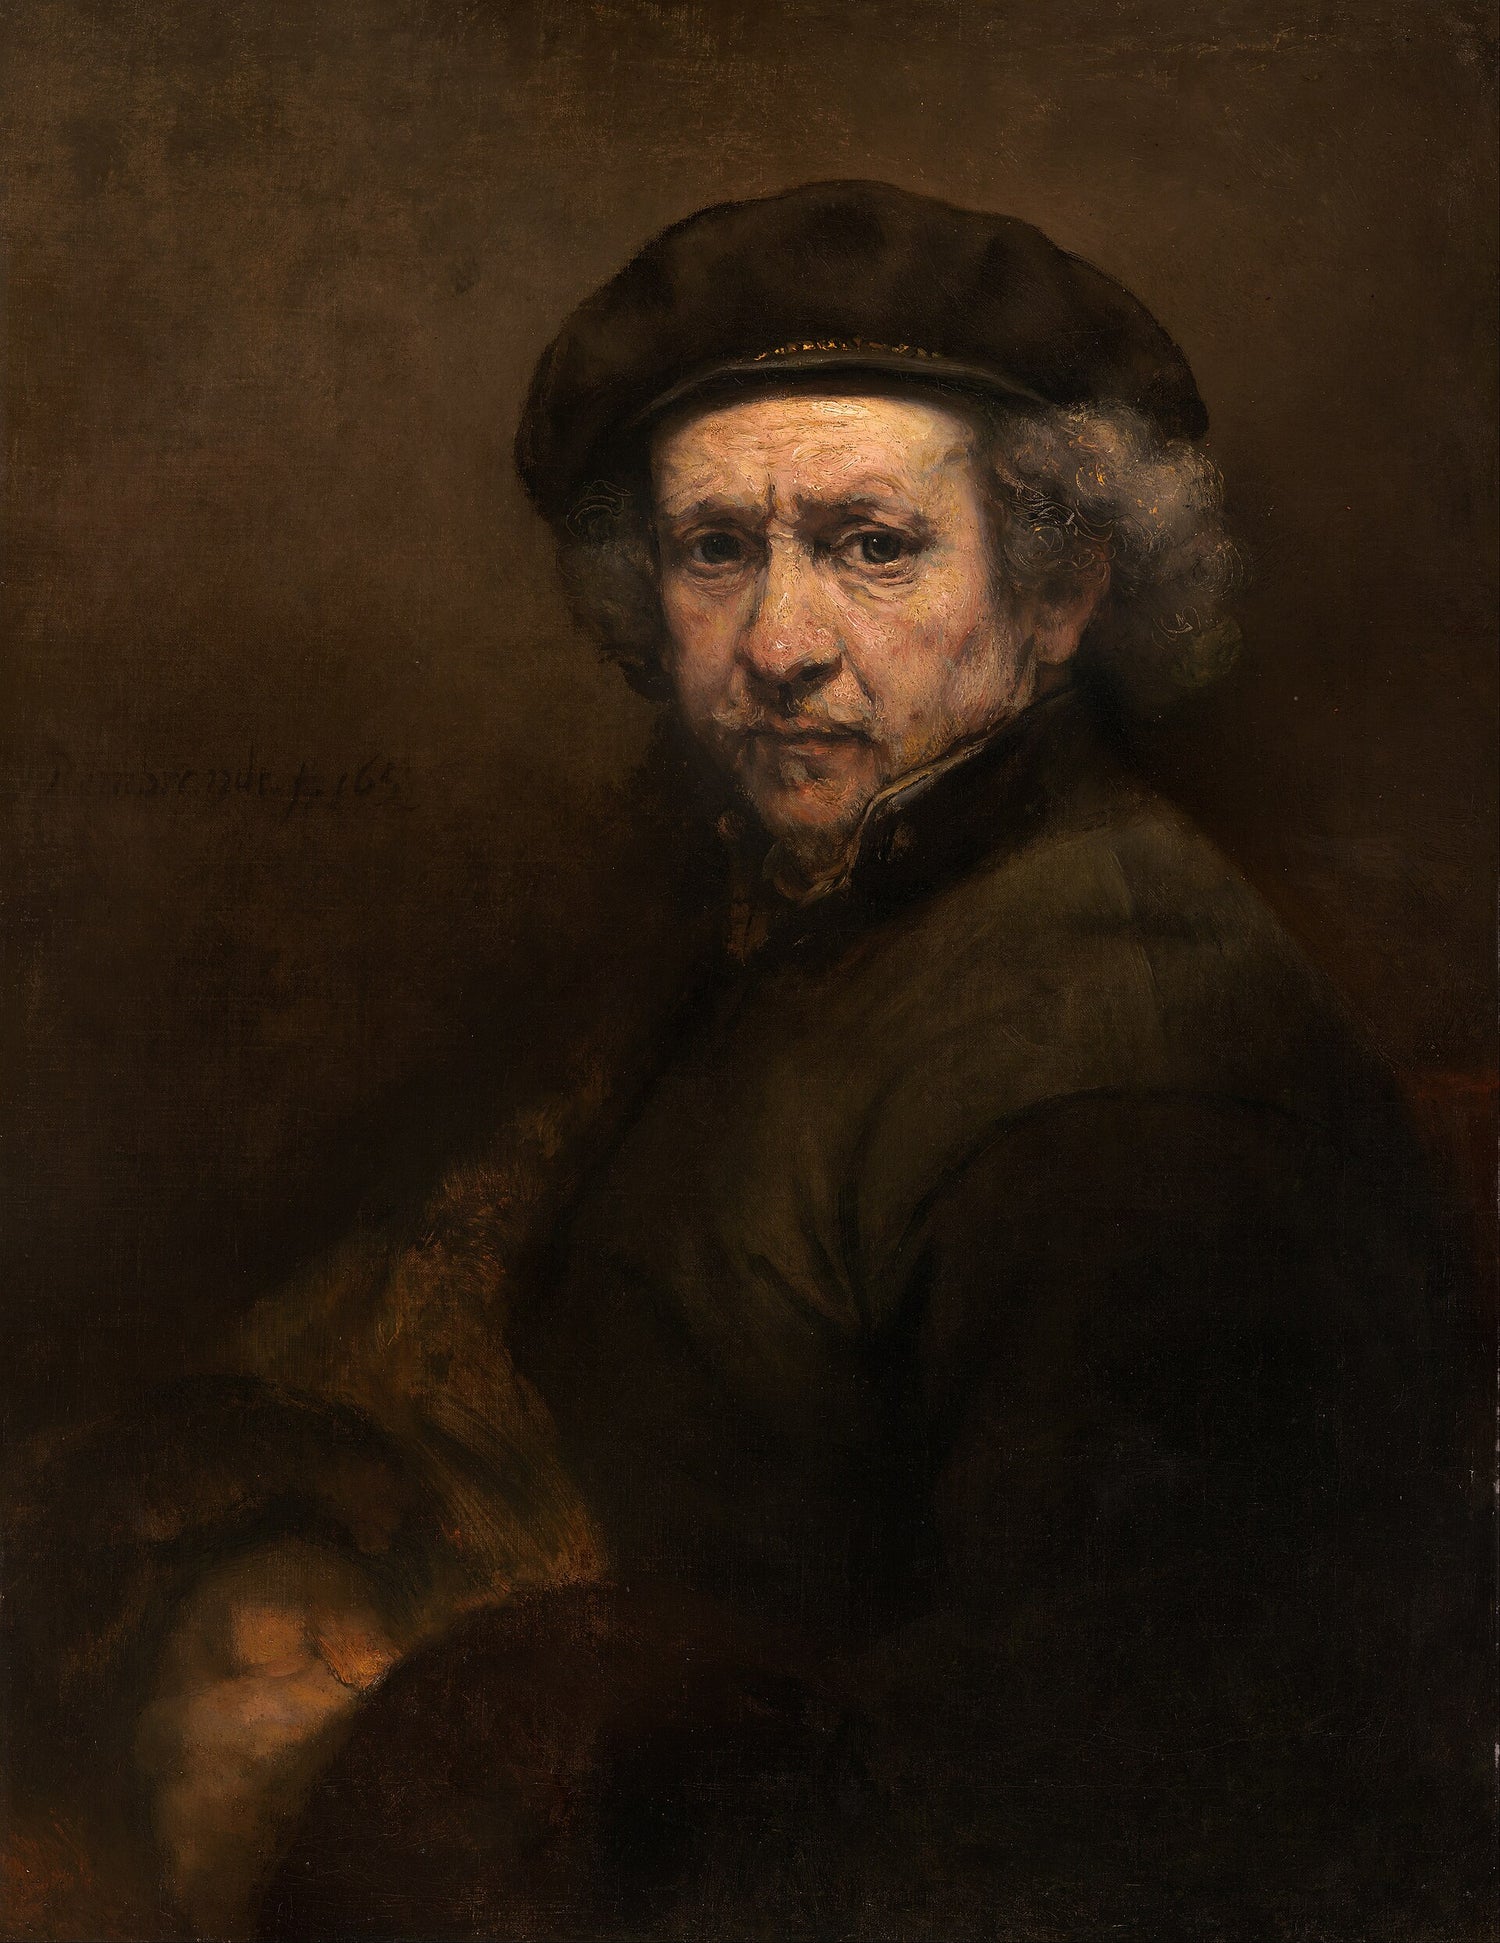 Rembrandt van Rijn, self-portrait